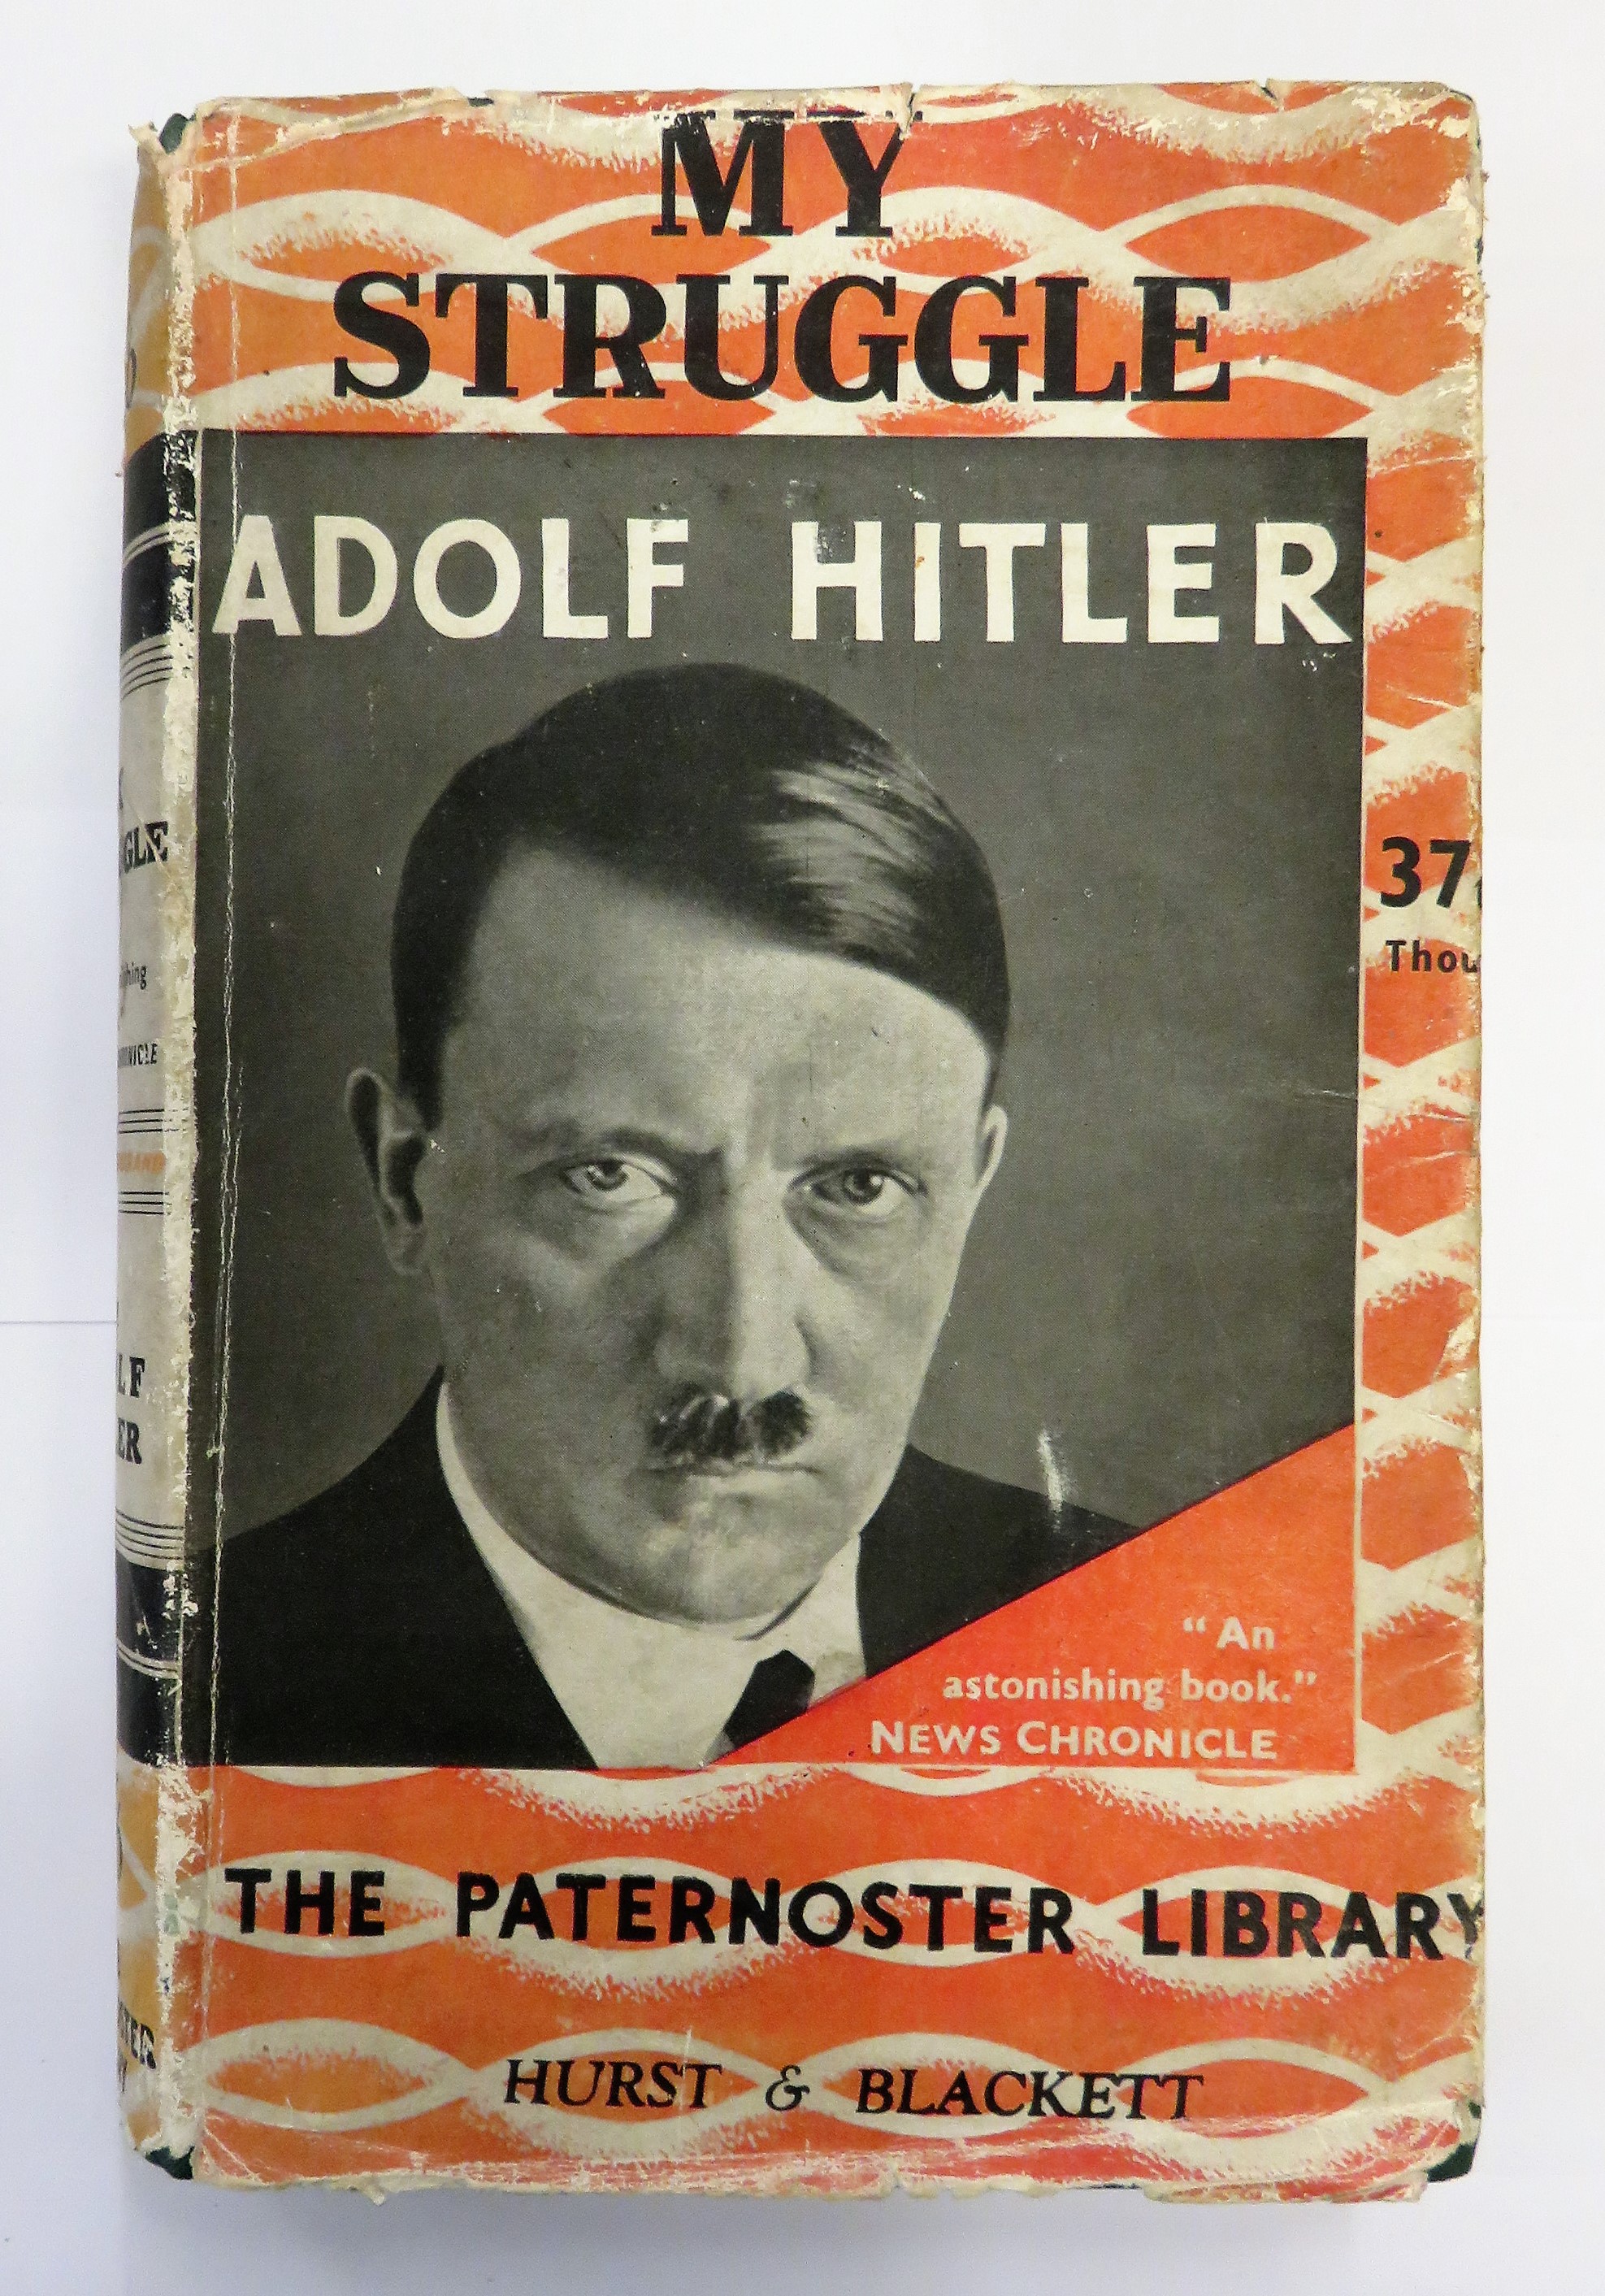 Mr Struggle (Mein Kampf)